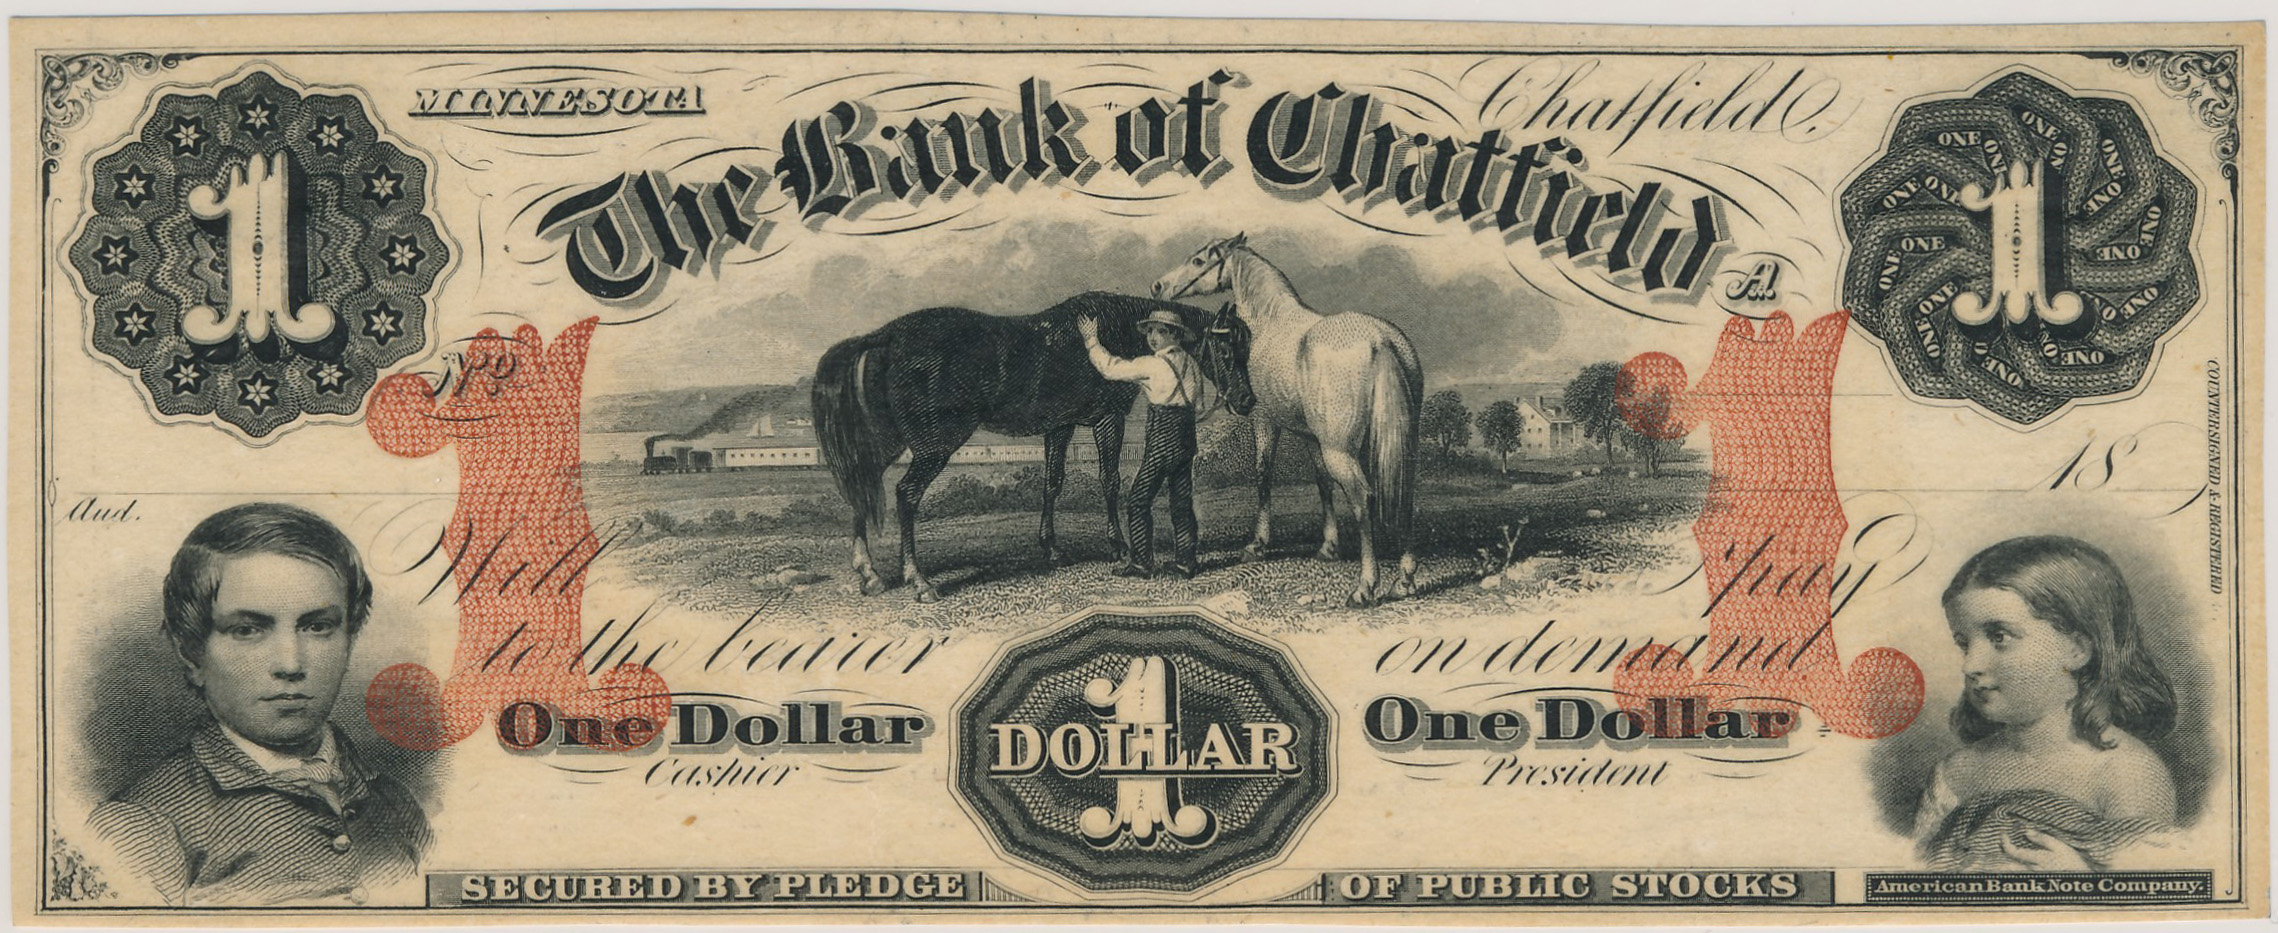 $1 Bank of Chatfield